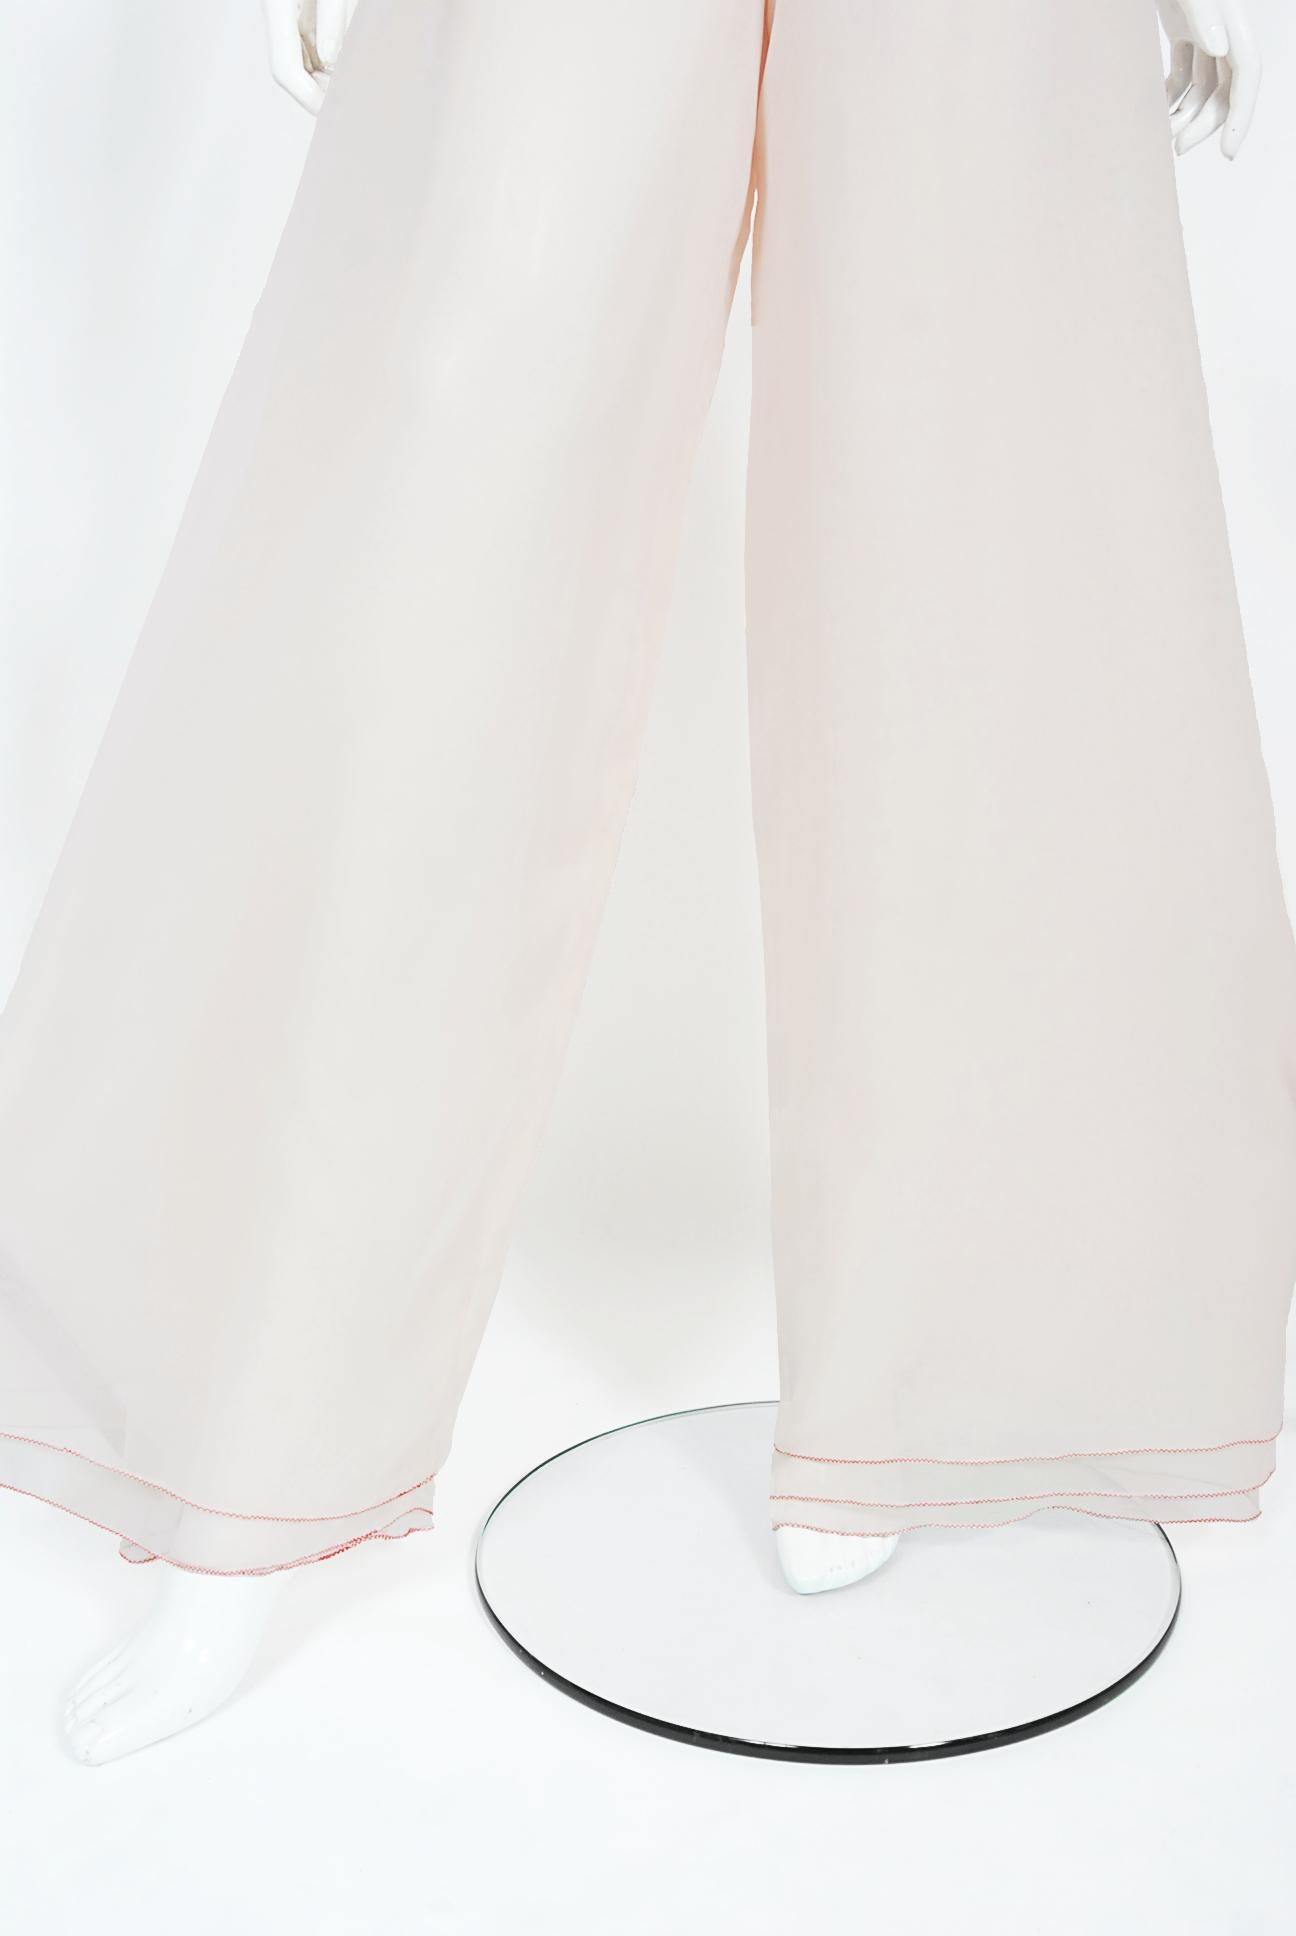 Vintage 1970's Stephen Burrows Pale-Pink Layered Chiffon Wrap Blouse Pantsuit For Sale 4